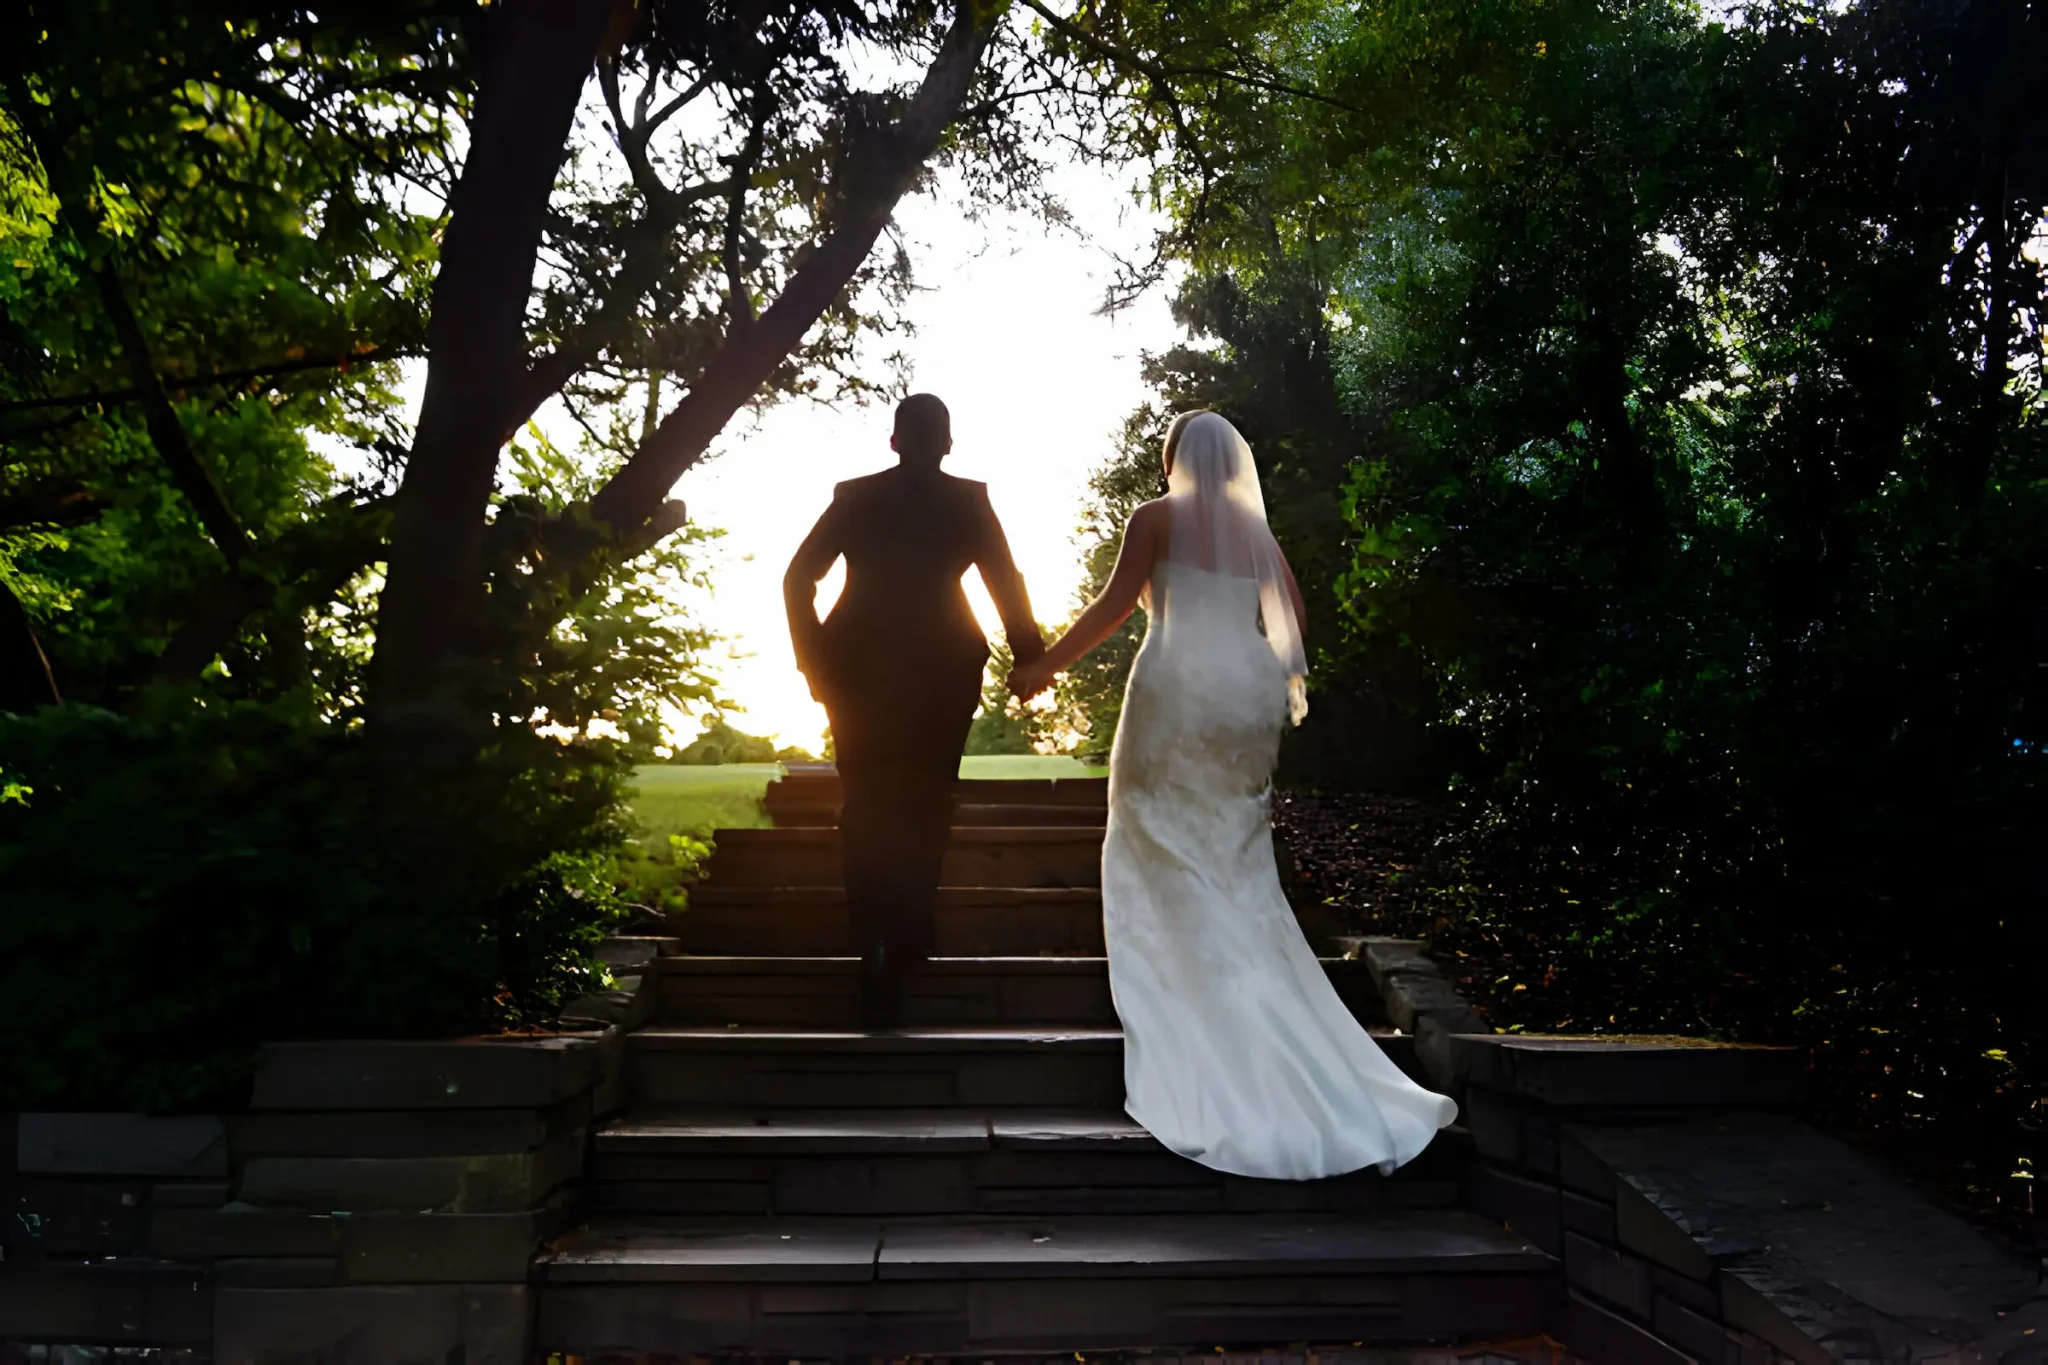 Wedding Photographer Photography Couple Walking Up Steps Into The Sunshine